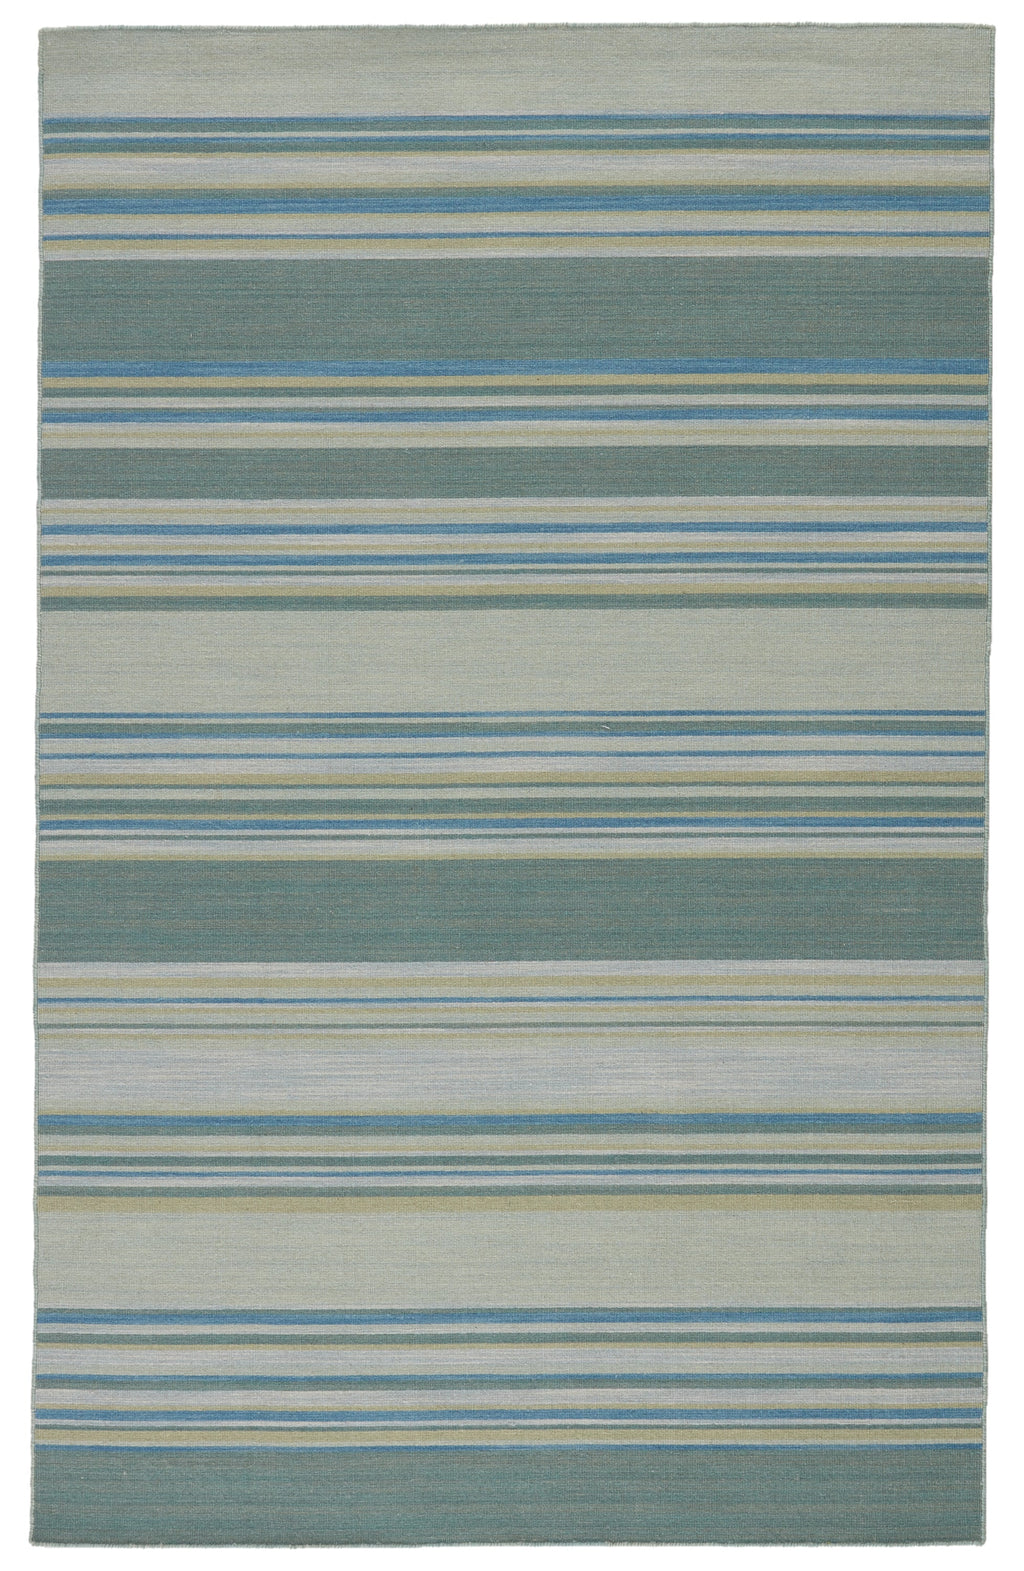 kiawah stripe rug in harbor gray dusty turquoise design by jaipur 1